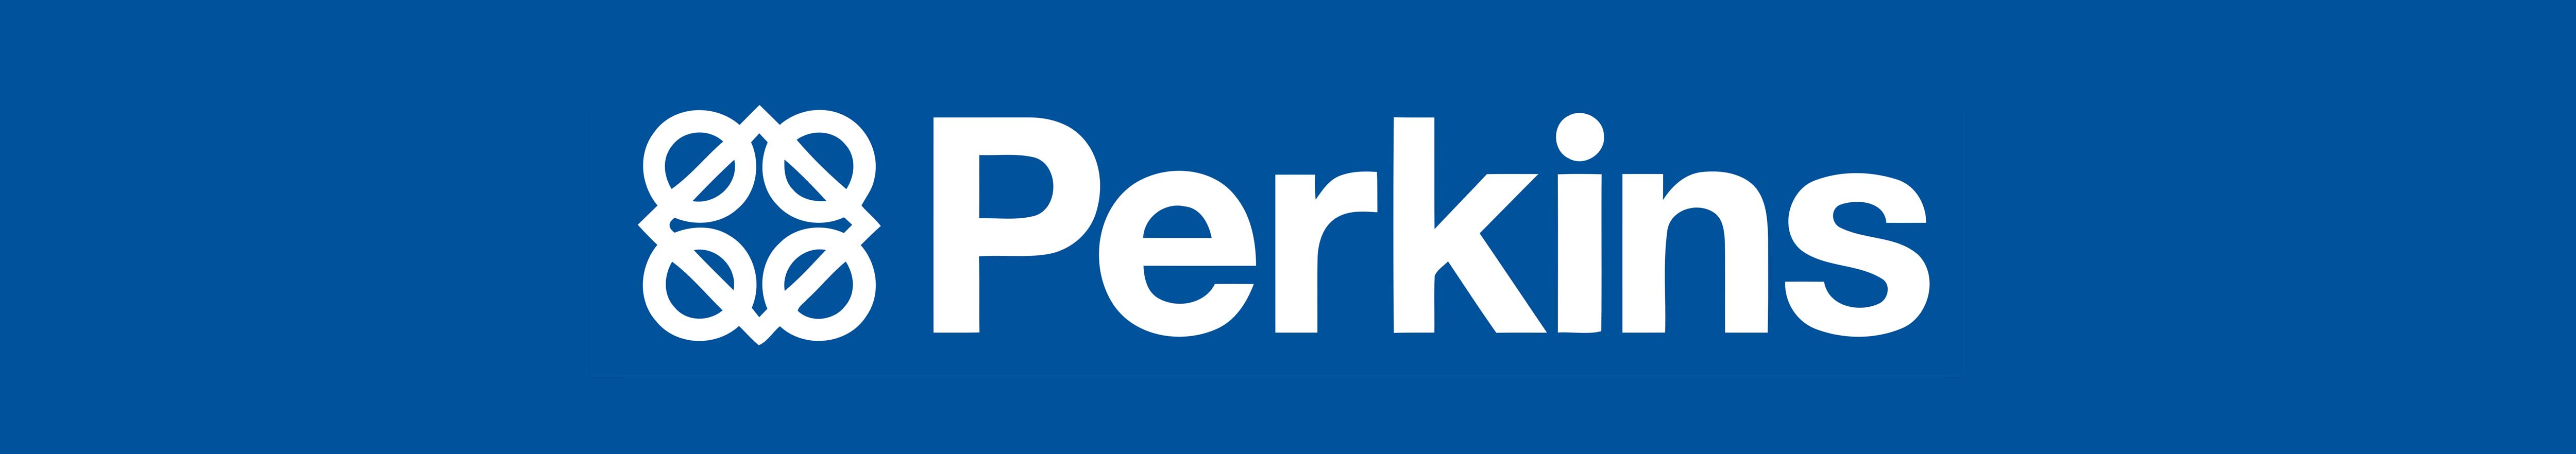 Perkins_Logo_small